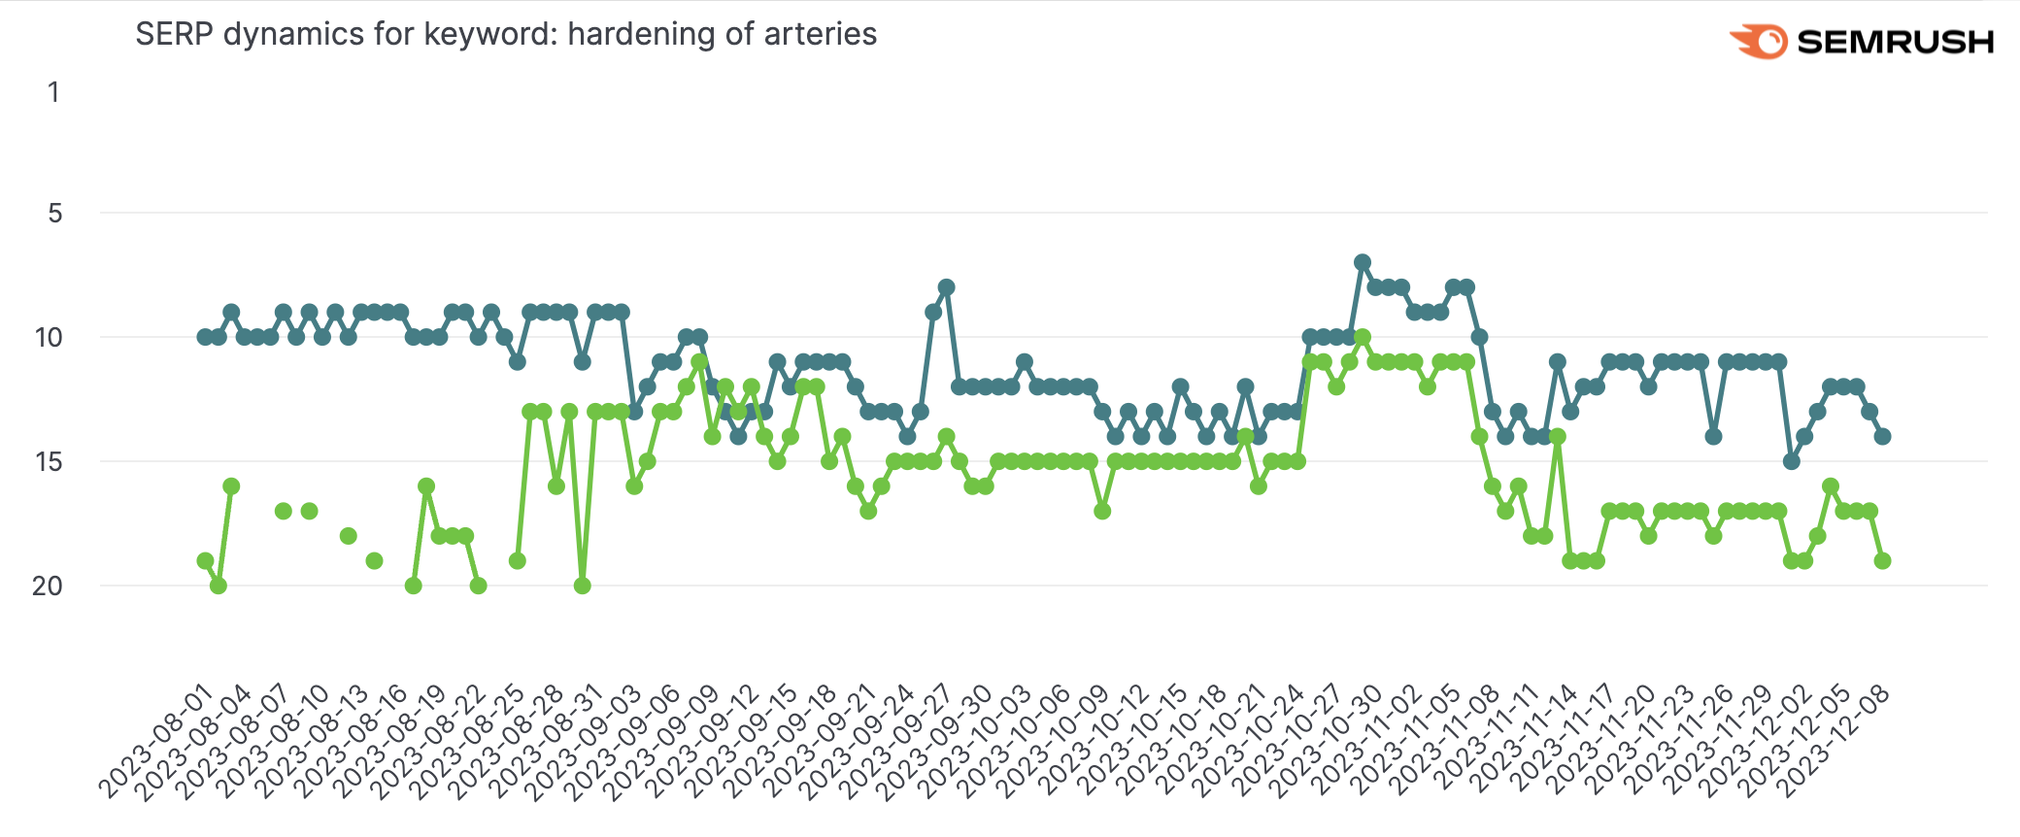 SERP dynamics for keywords: hardening of arteries